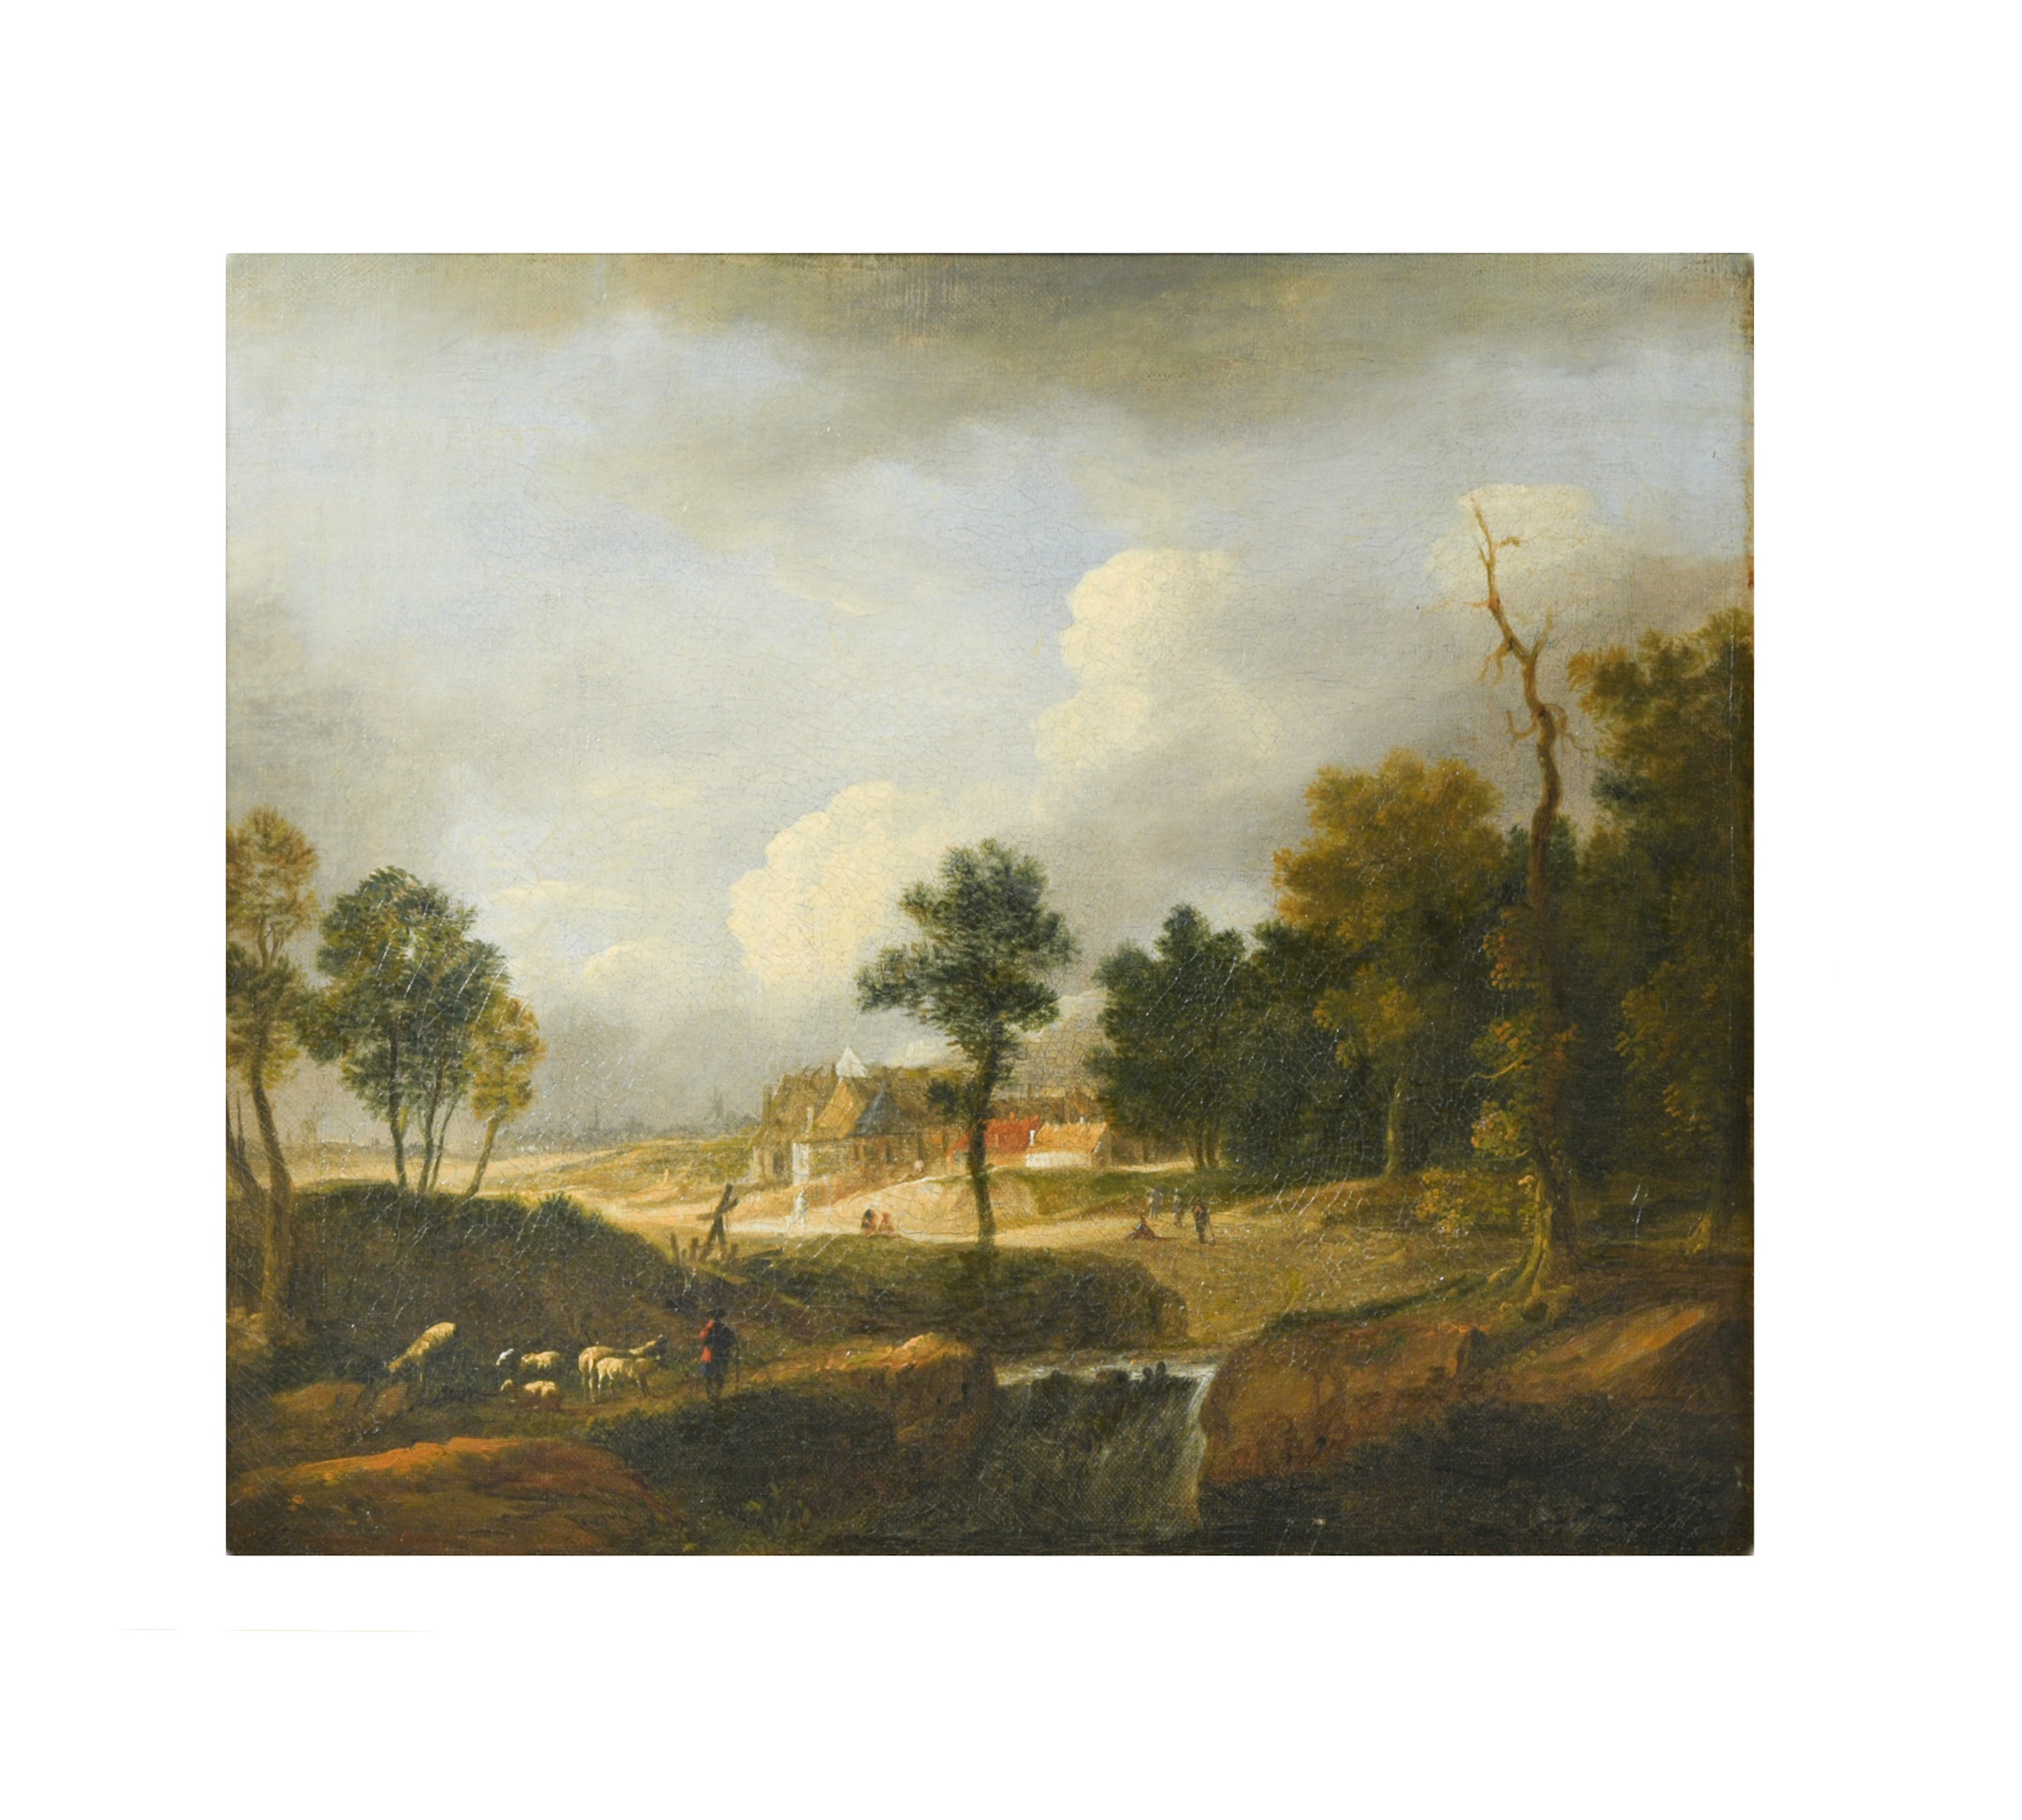 Follower of Jacob van Ruisdael, 18th Century